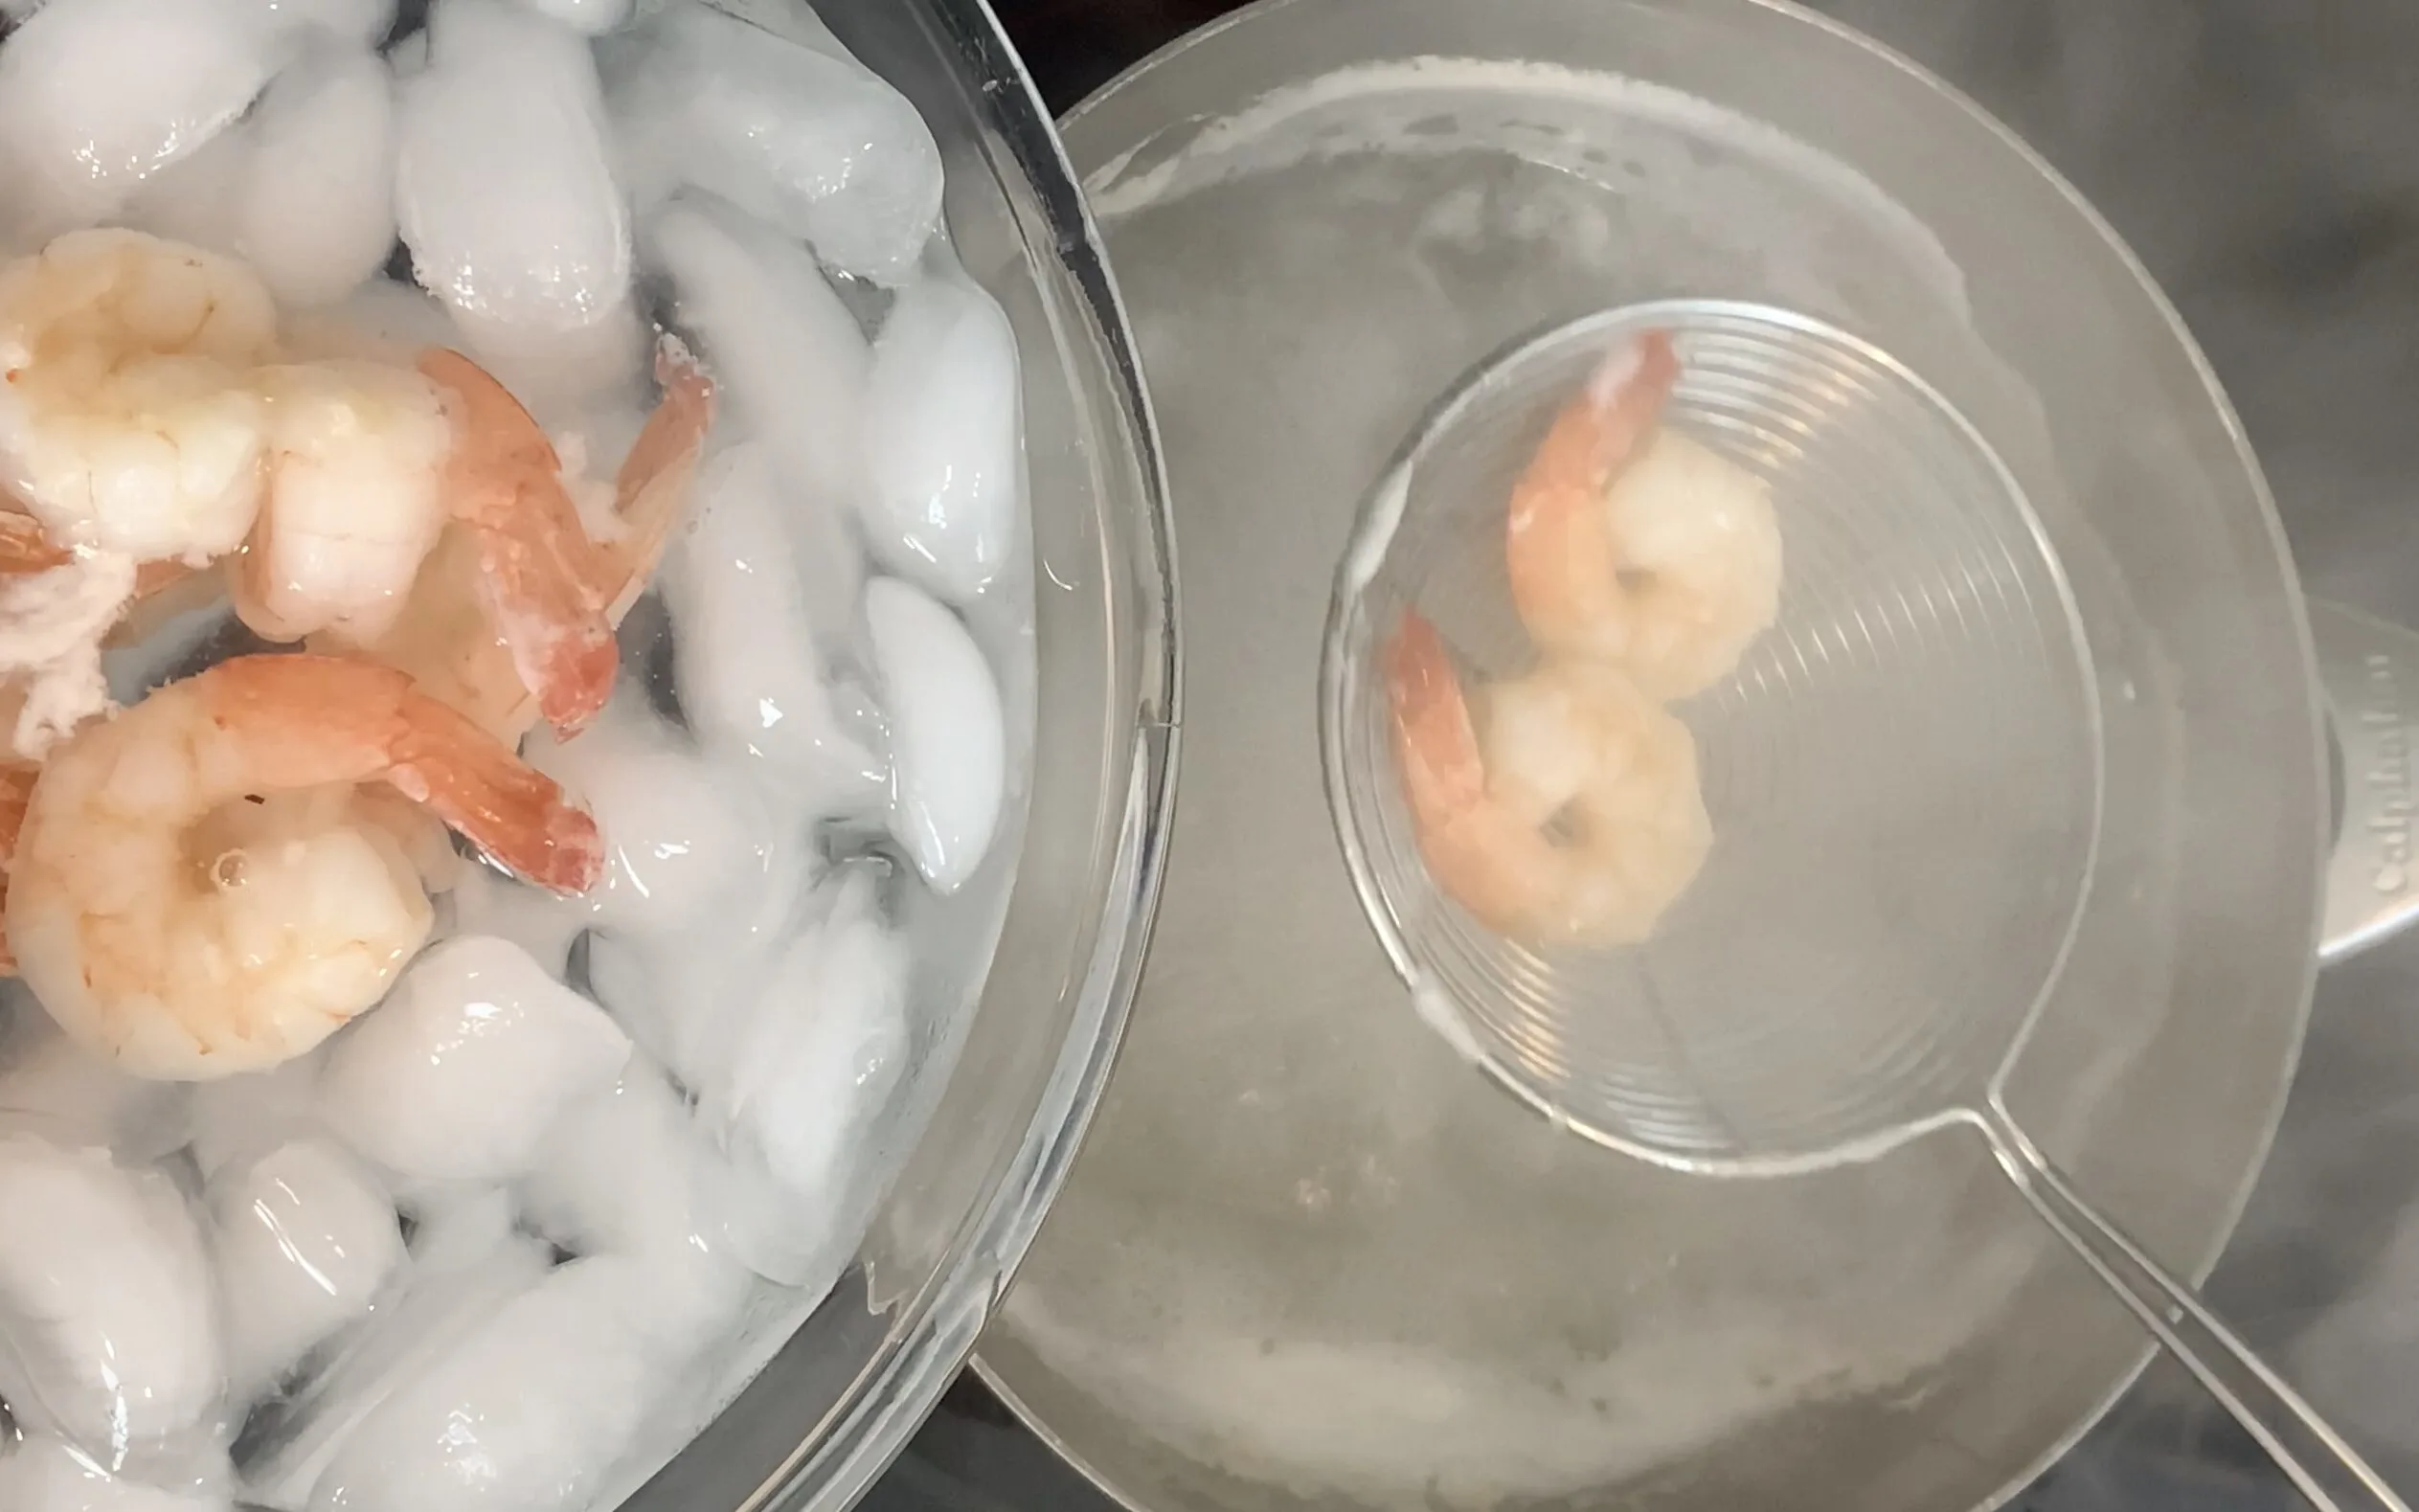 Adding shrimp to ice bowl for Boston rolls